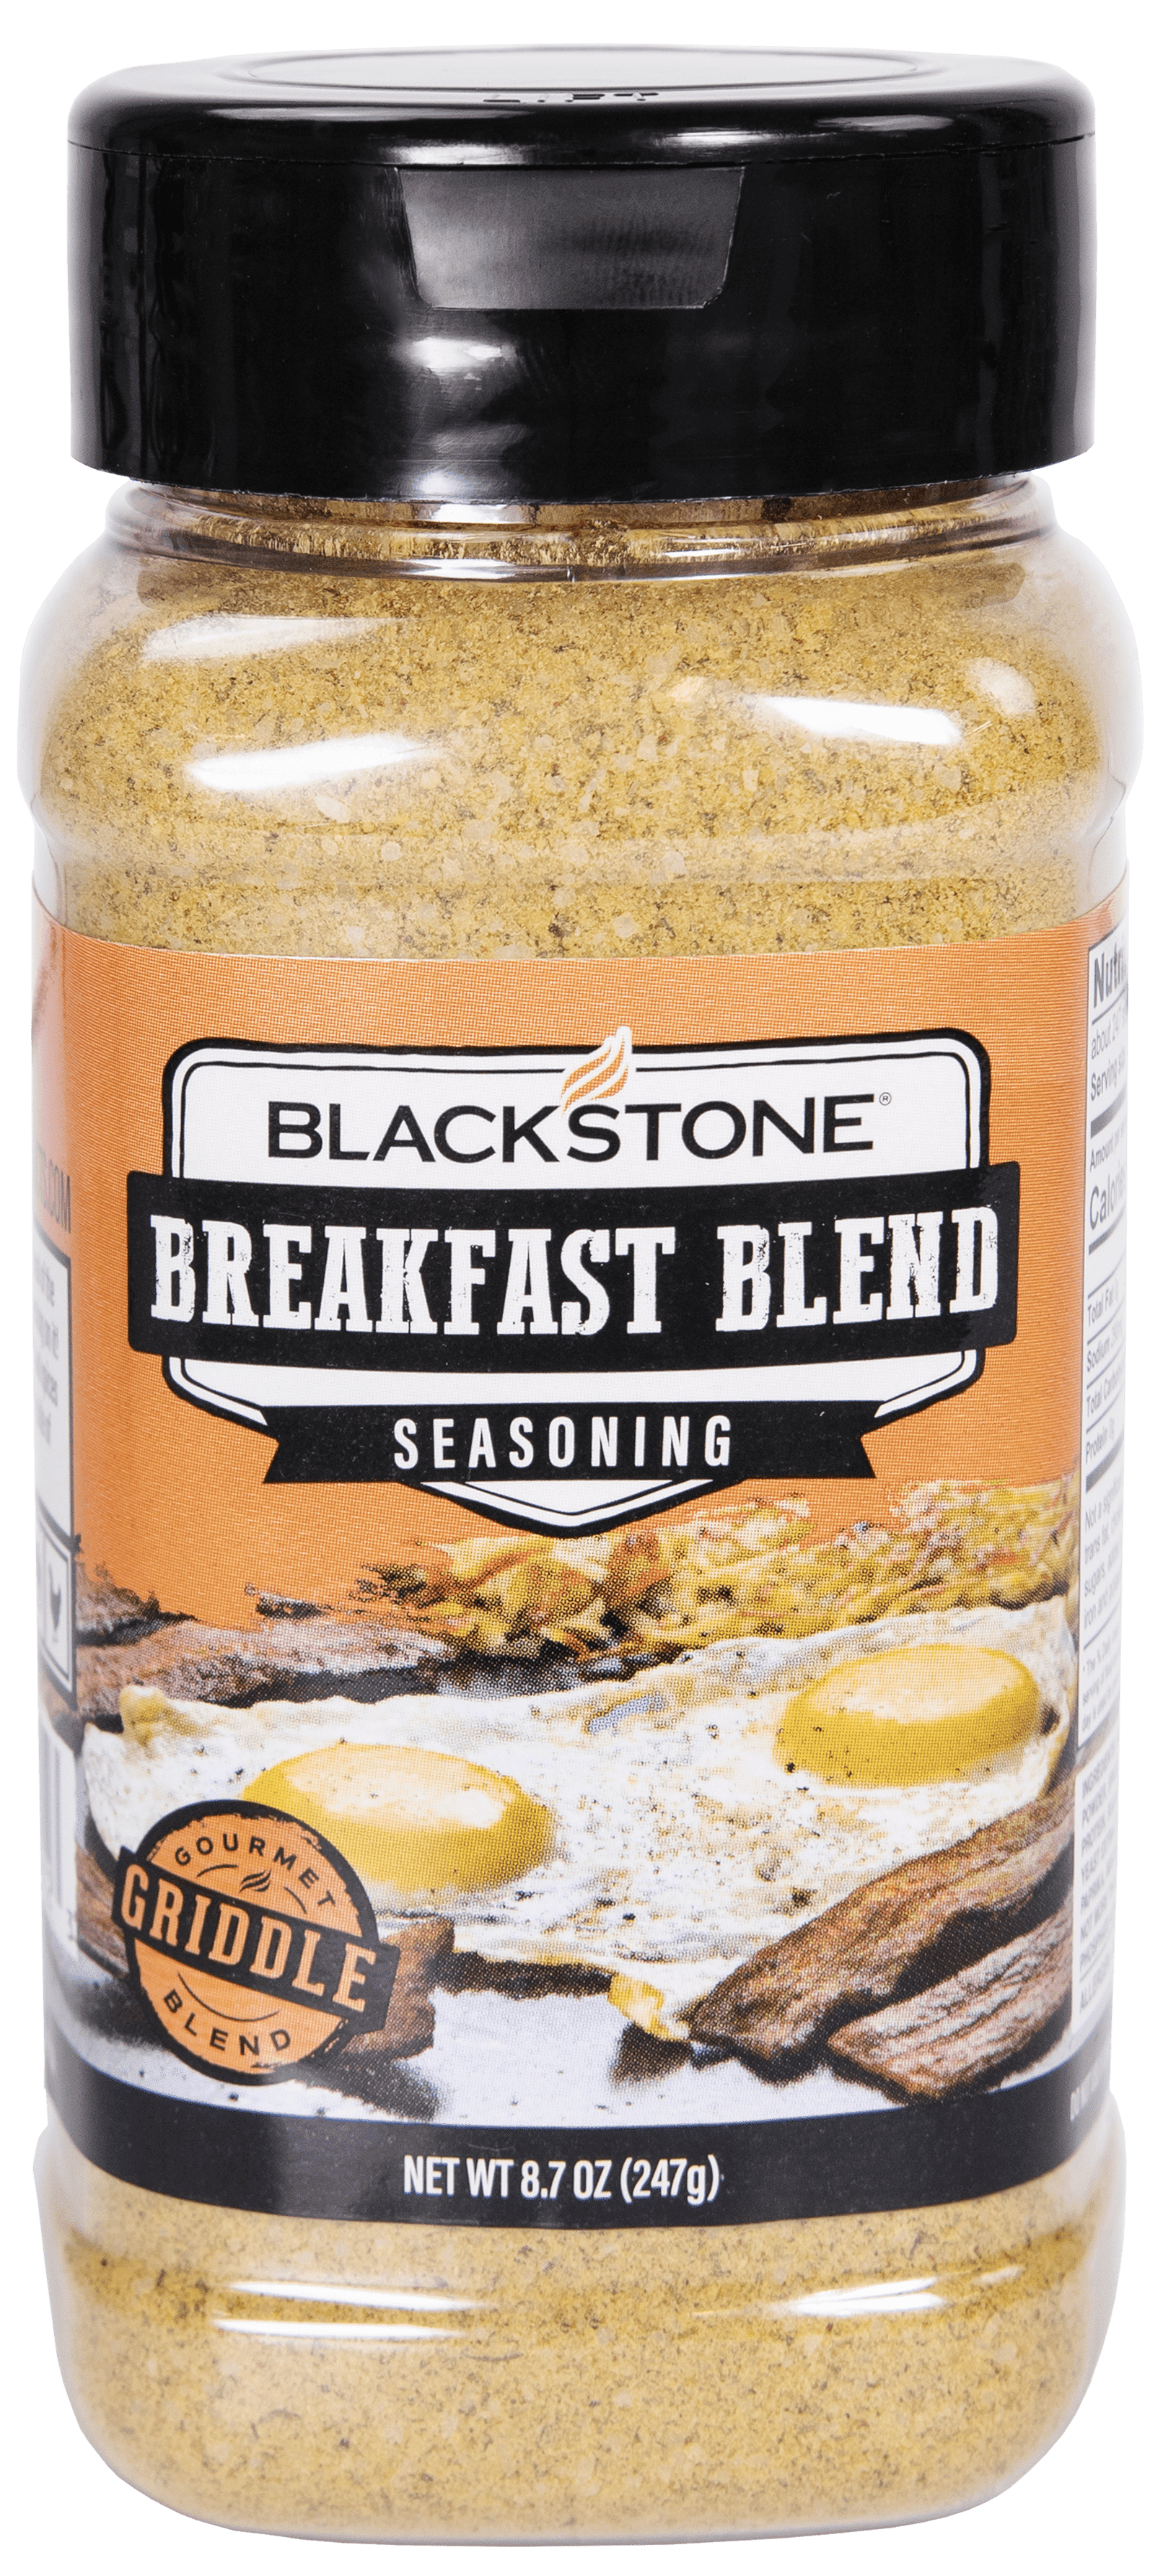 Blackstone Breakfast Blend Seasoning, 8.7 oz